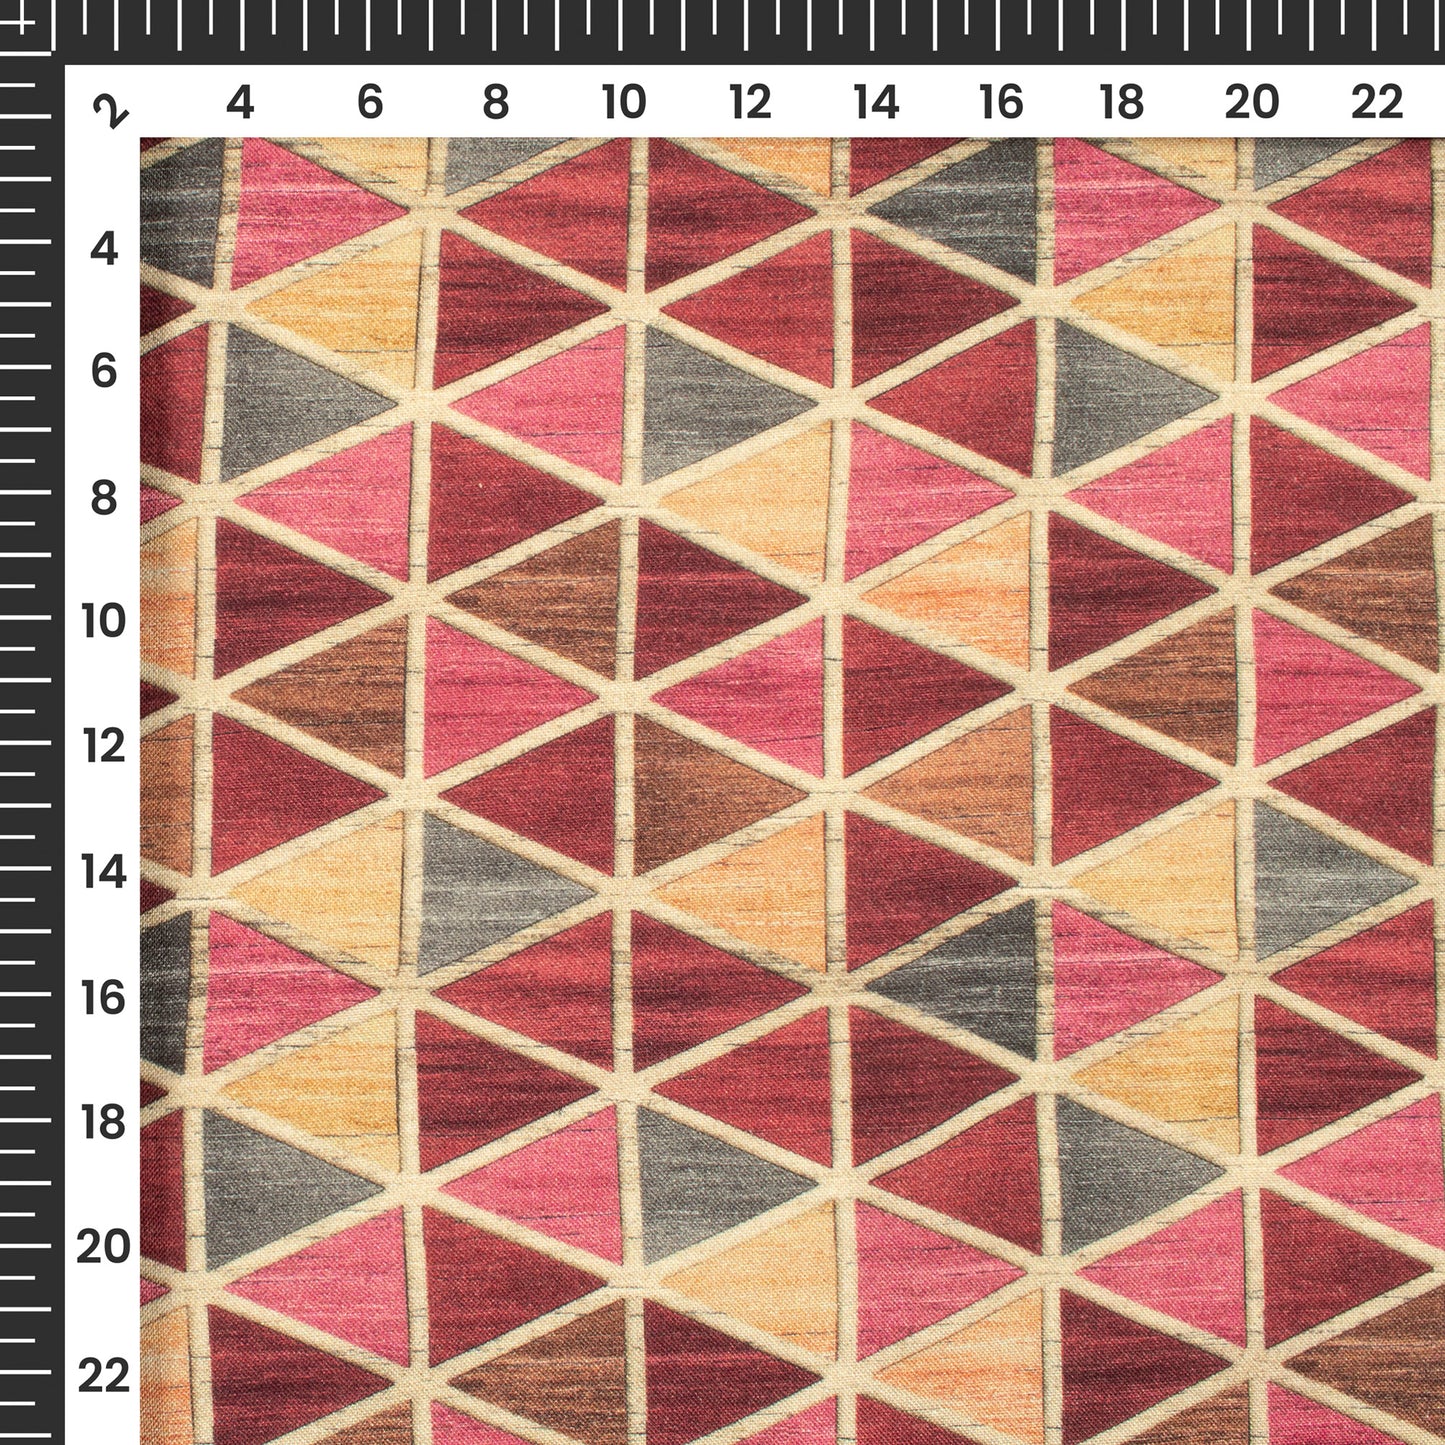 Triangle Geometric Digital Print Viscose Rayon Fabric (Width 58 Inches)